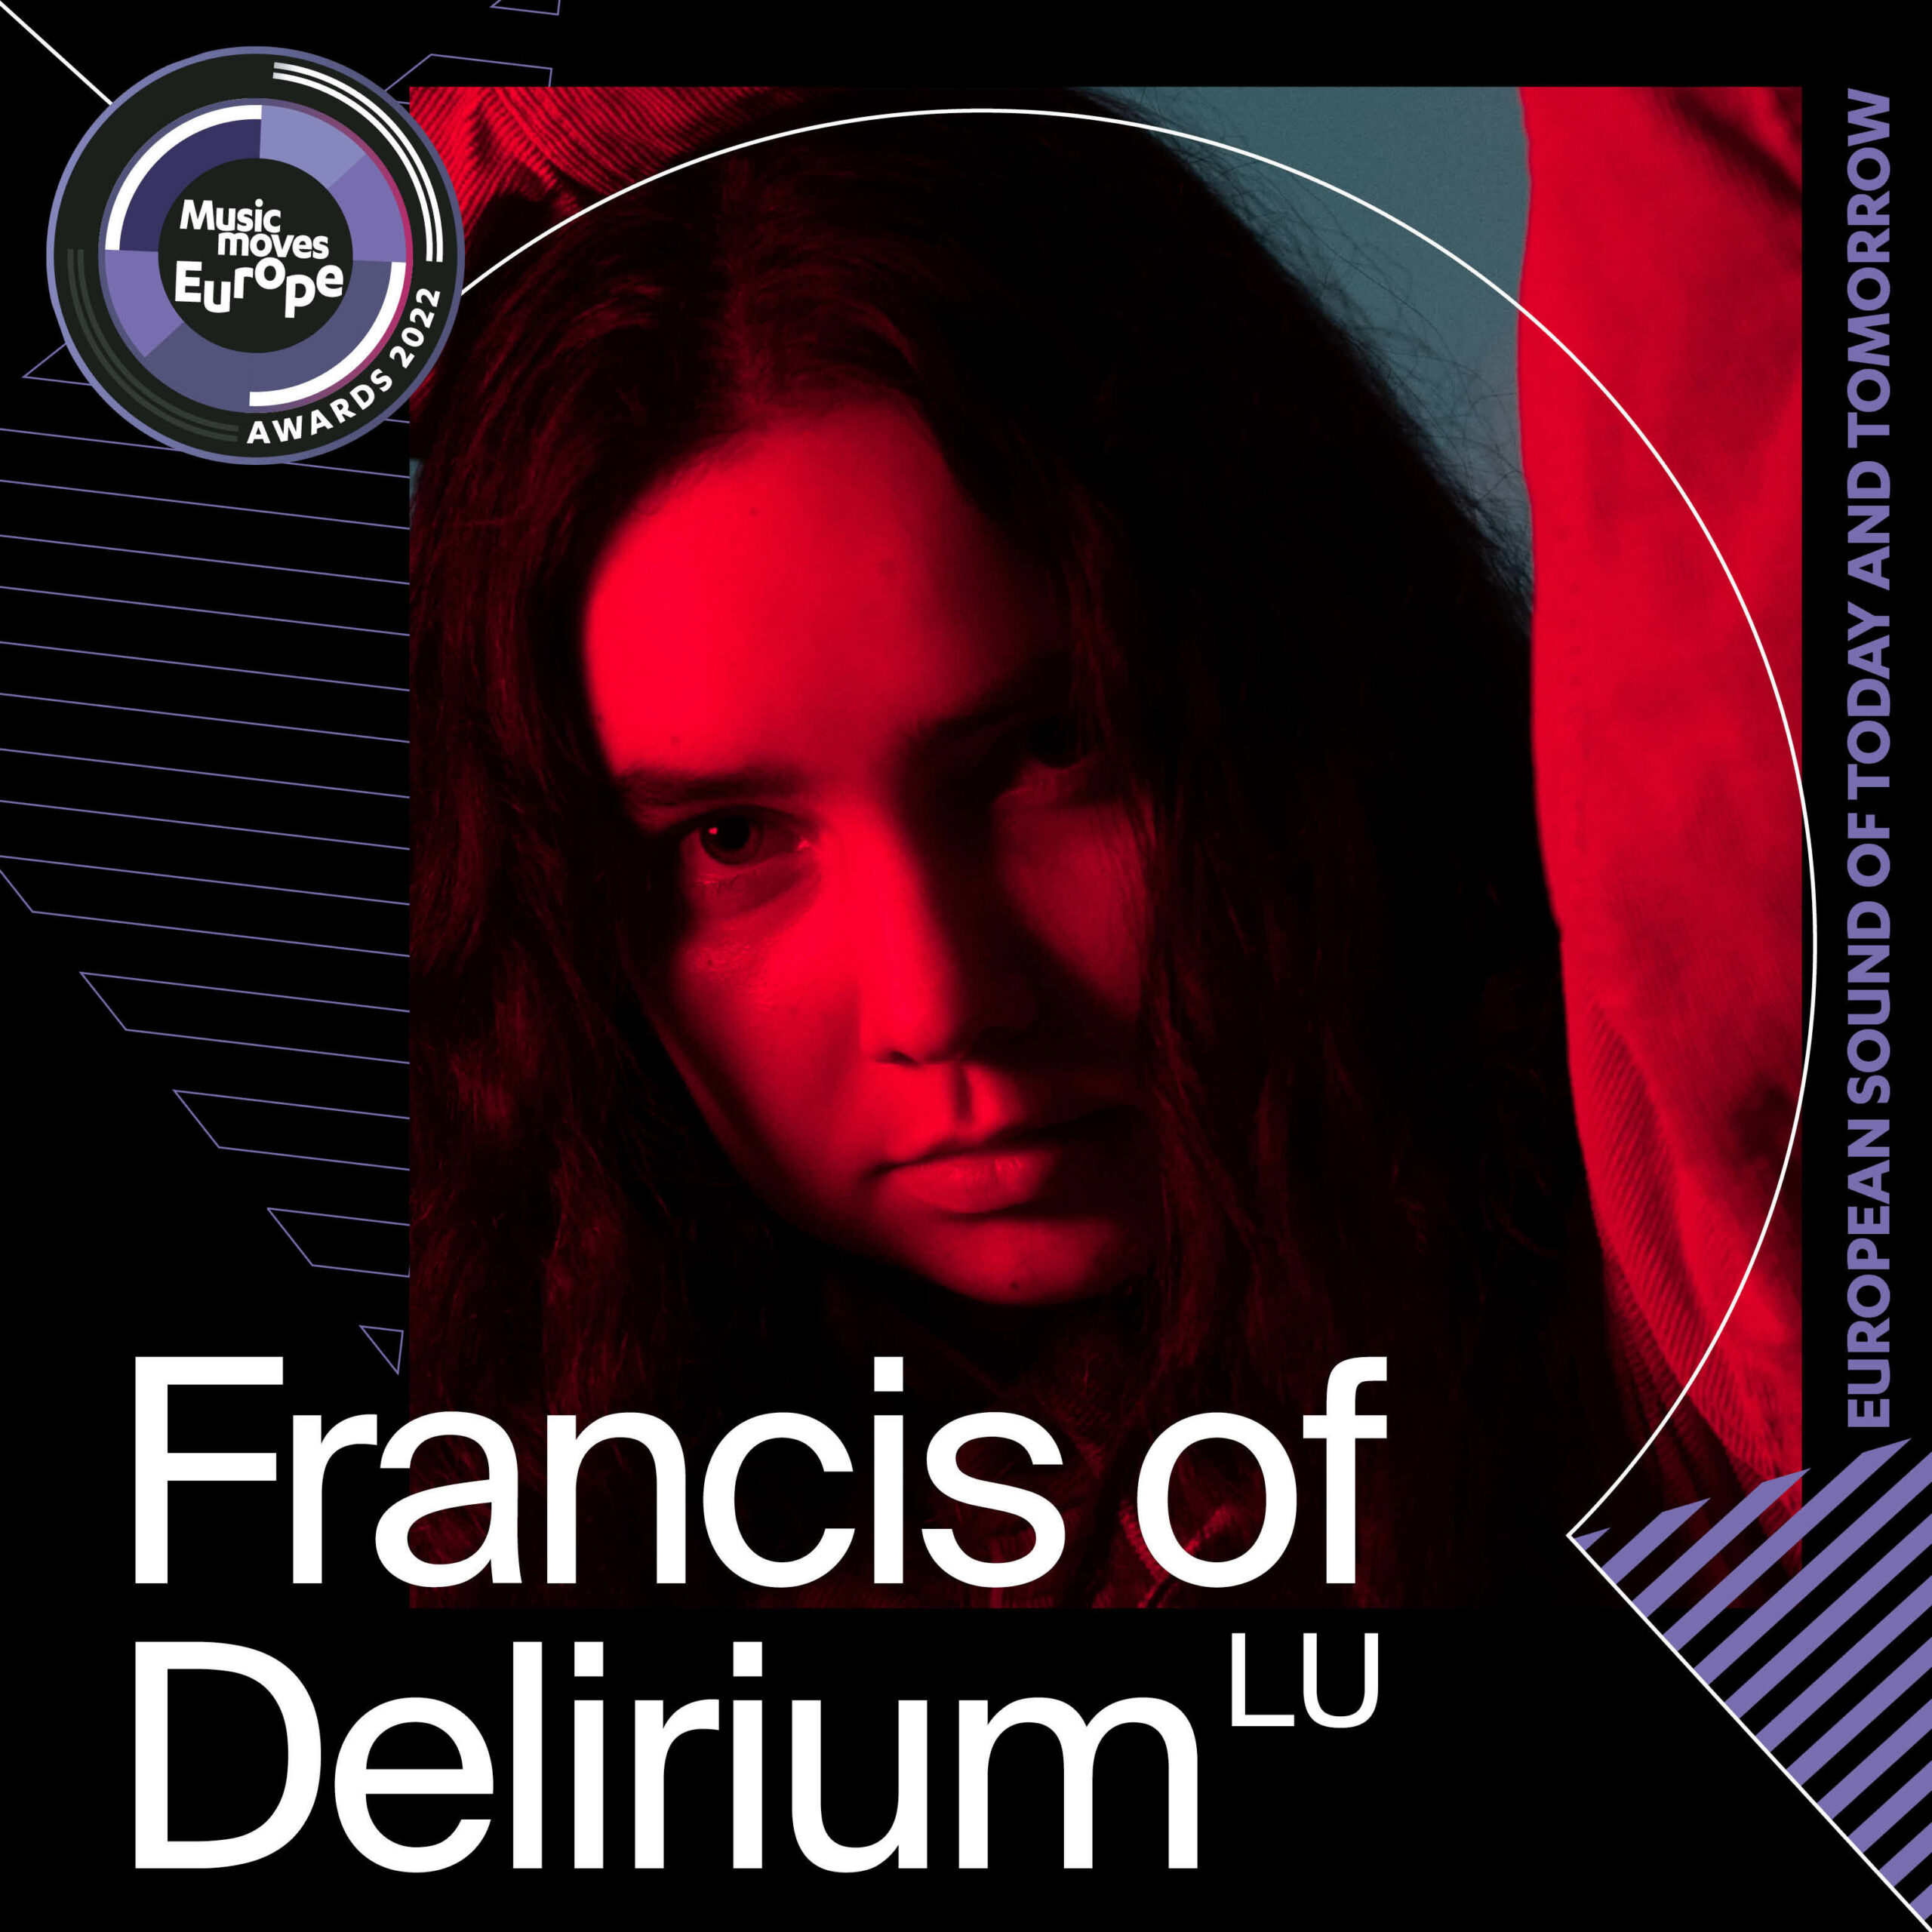 Francis of Delirium nominated for the prestigious Music Moves Europe Awards 2022